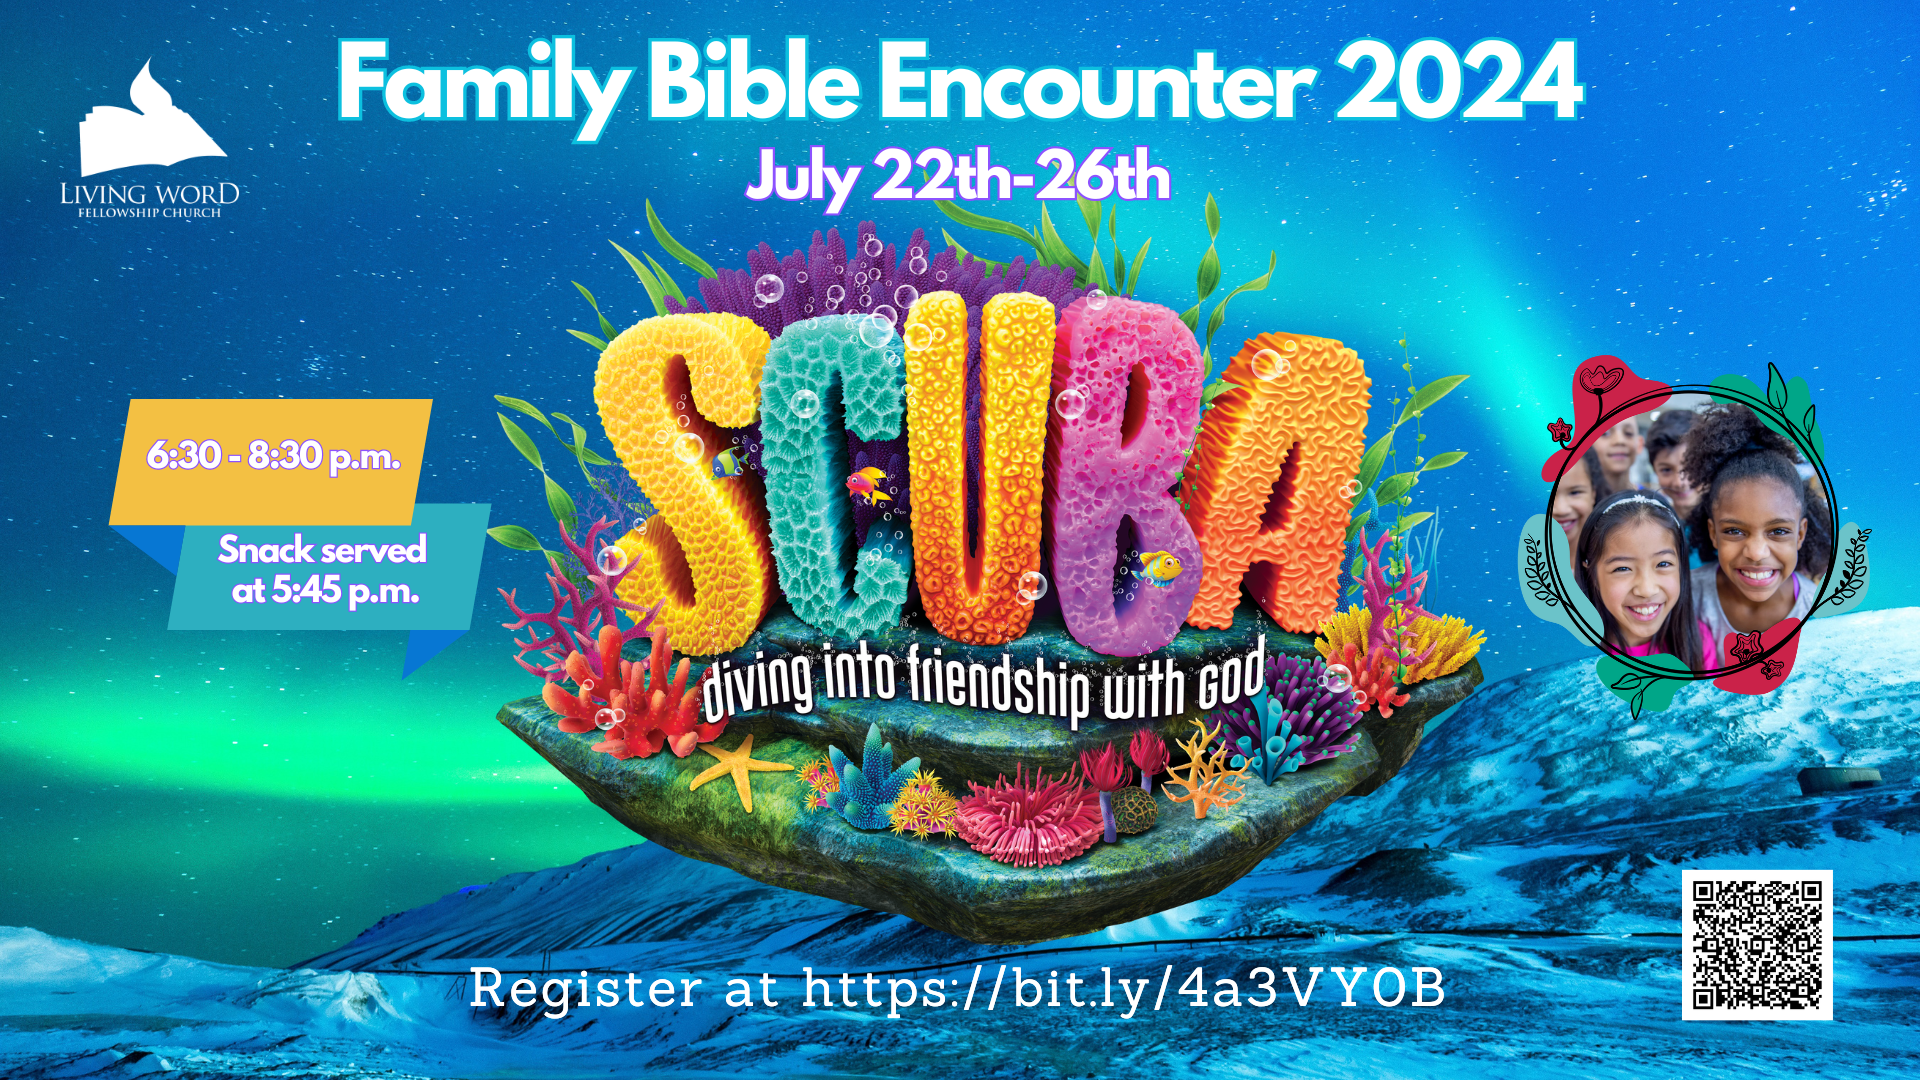 Family Bible Encounter head image